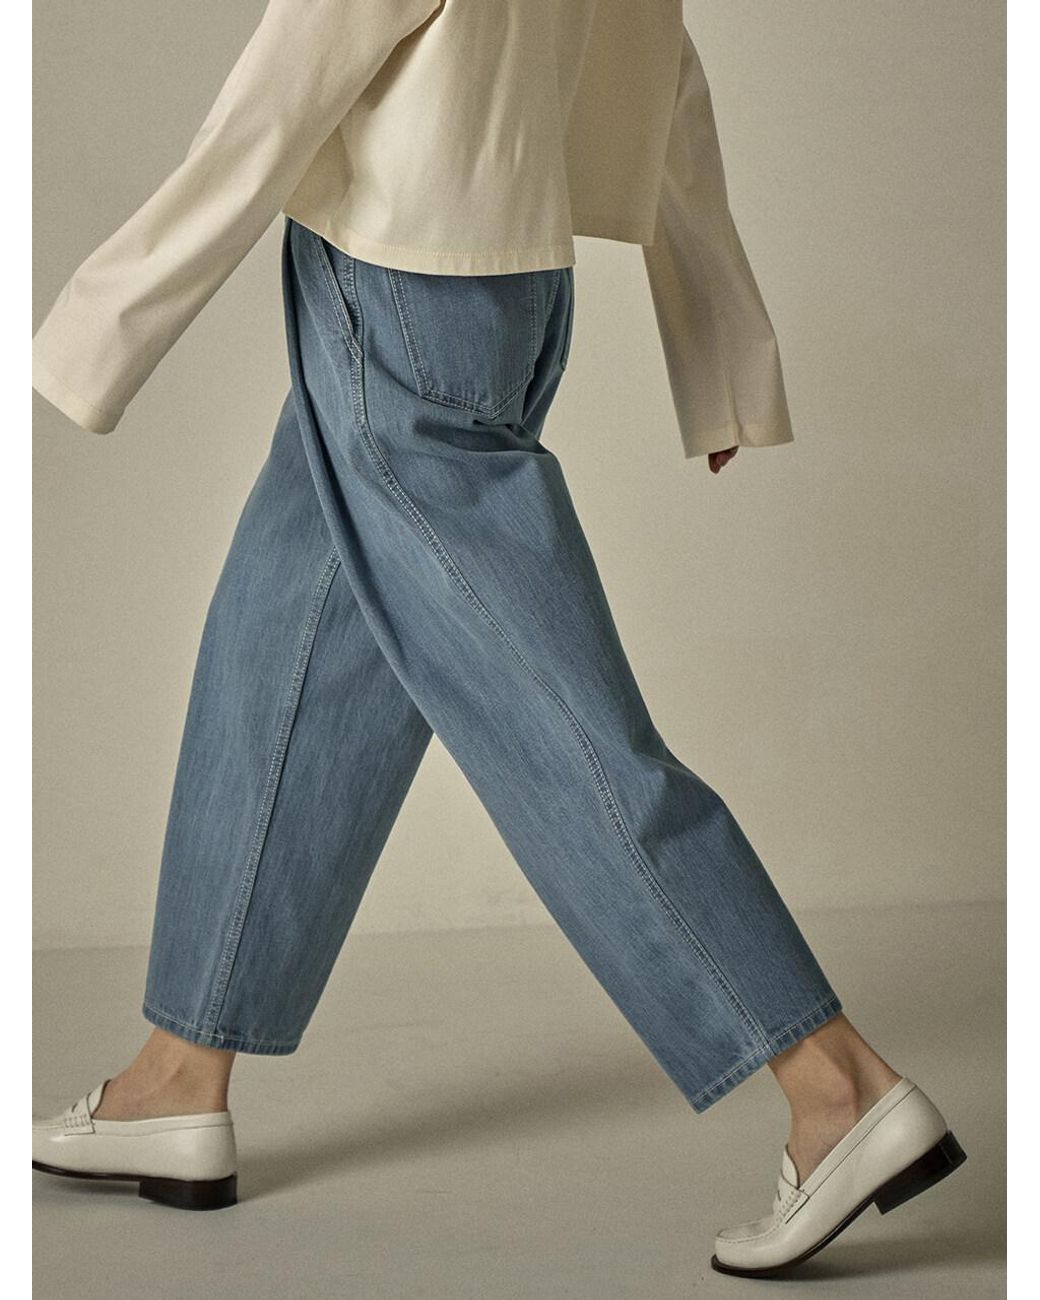 FACADE PATTERN Classic Denim in Deep Indigo Blue Womens Clothing Jeans Straight-leg jeans 